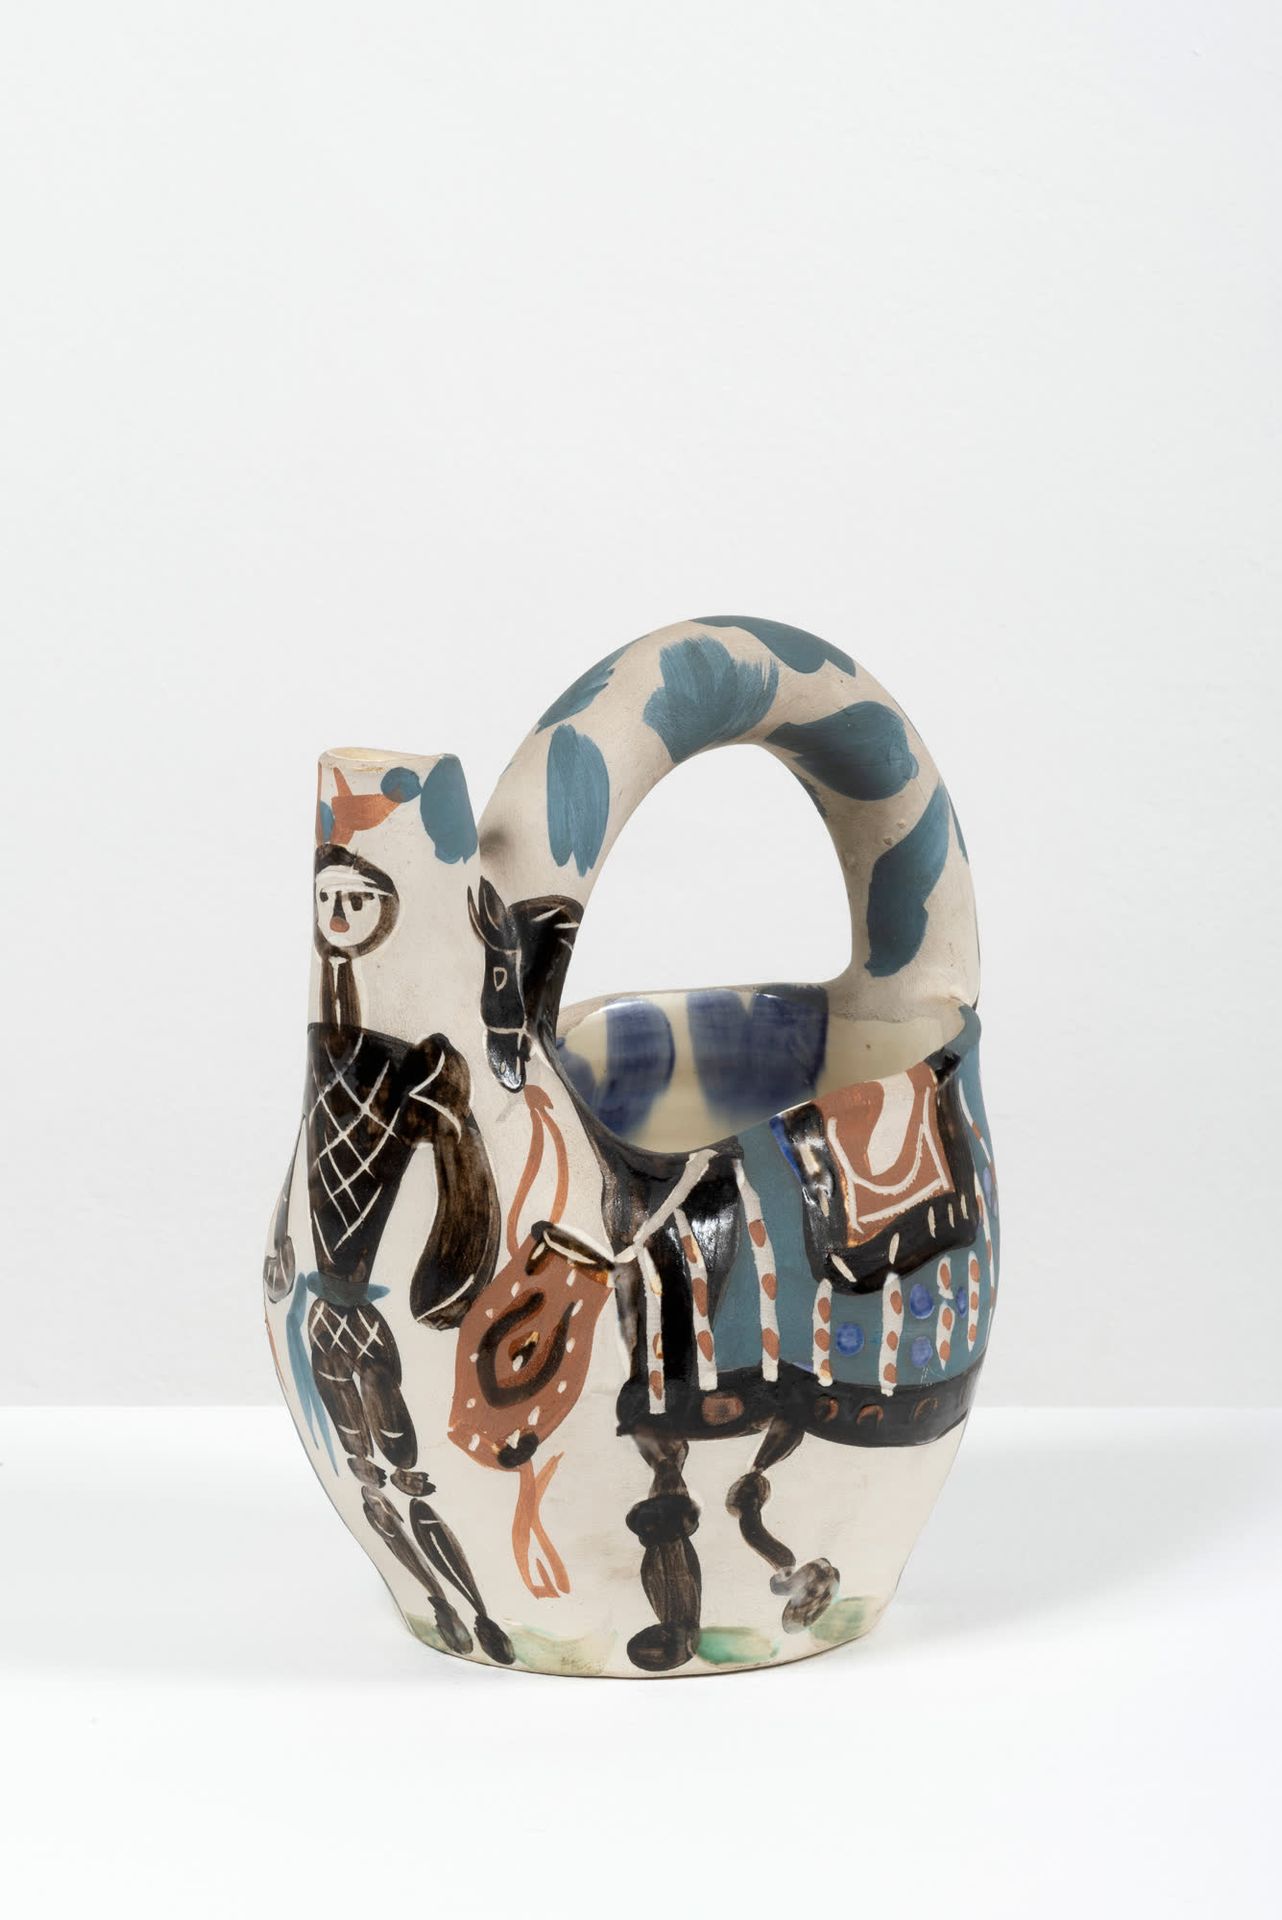 Pablo Picasso (1881-1973) 骑手和马，1952年。
带手柄和颜料的陶瓷壶，白色背景上装饰着马和剪影。
背面印有 "Madoura "和 &hellip;